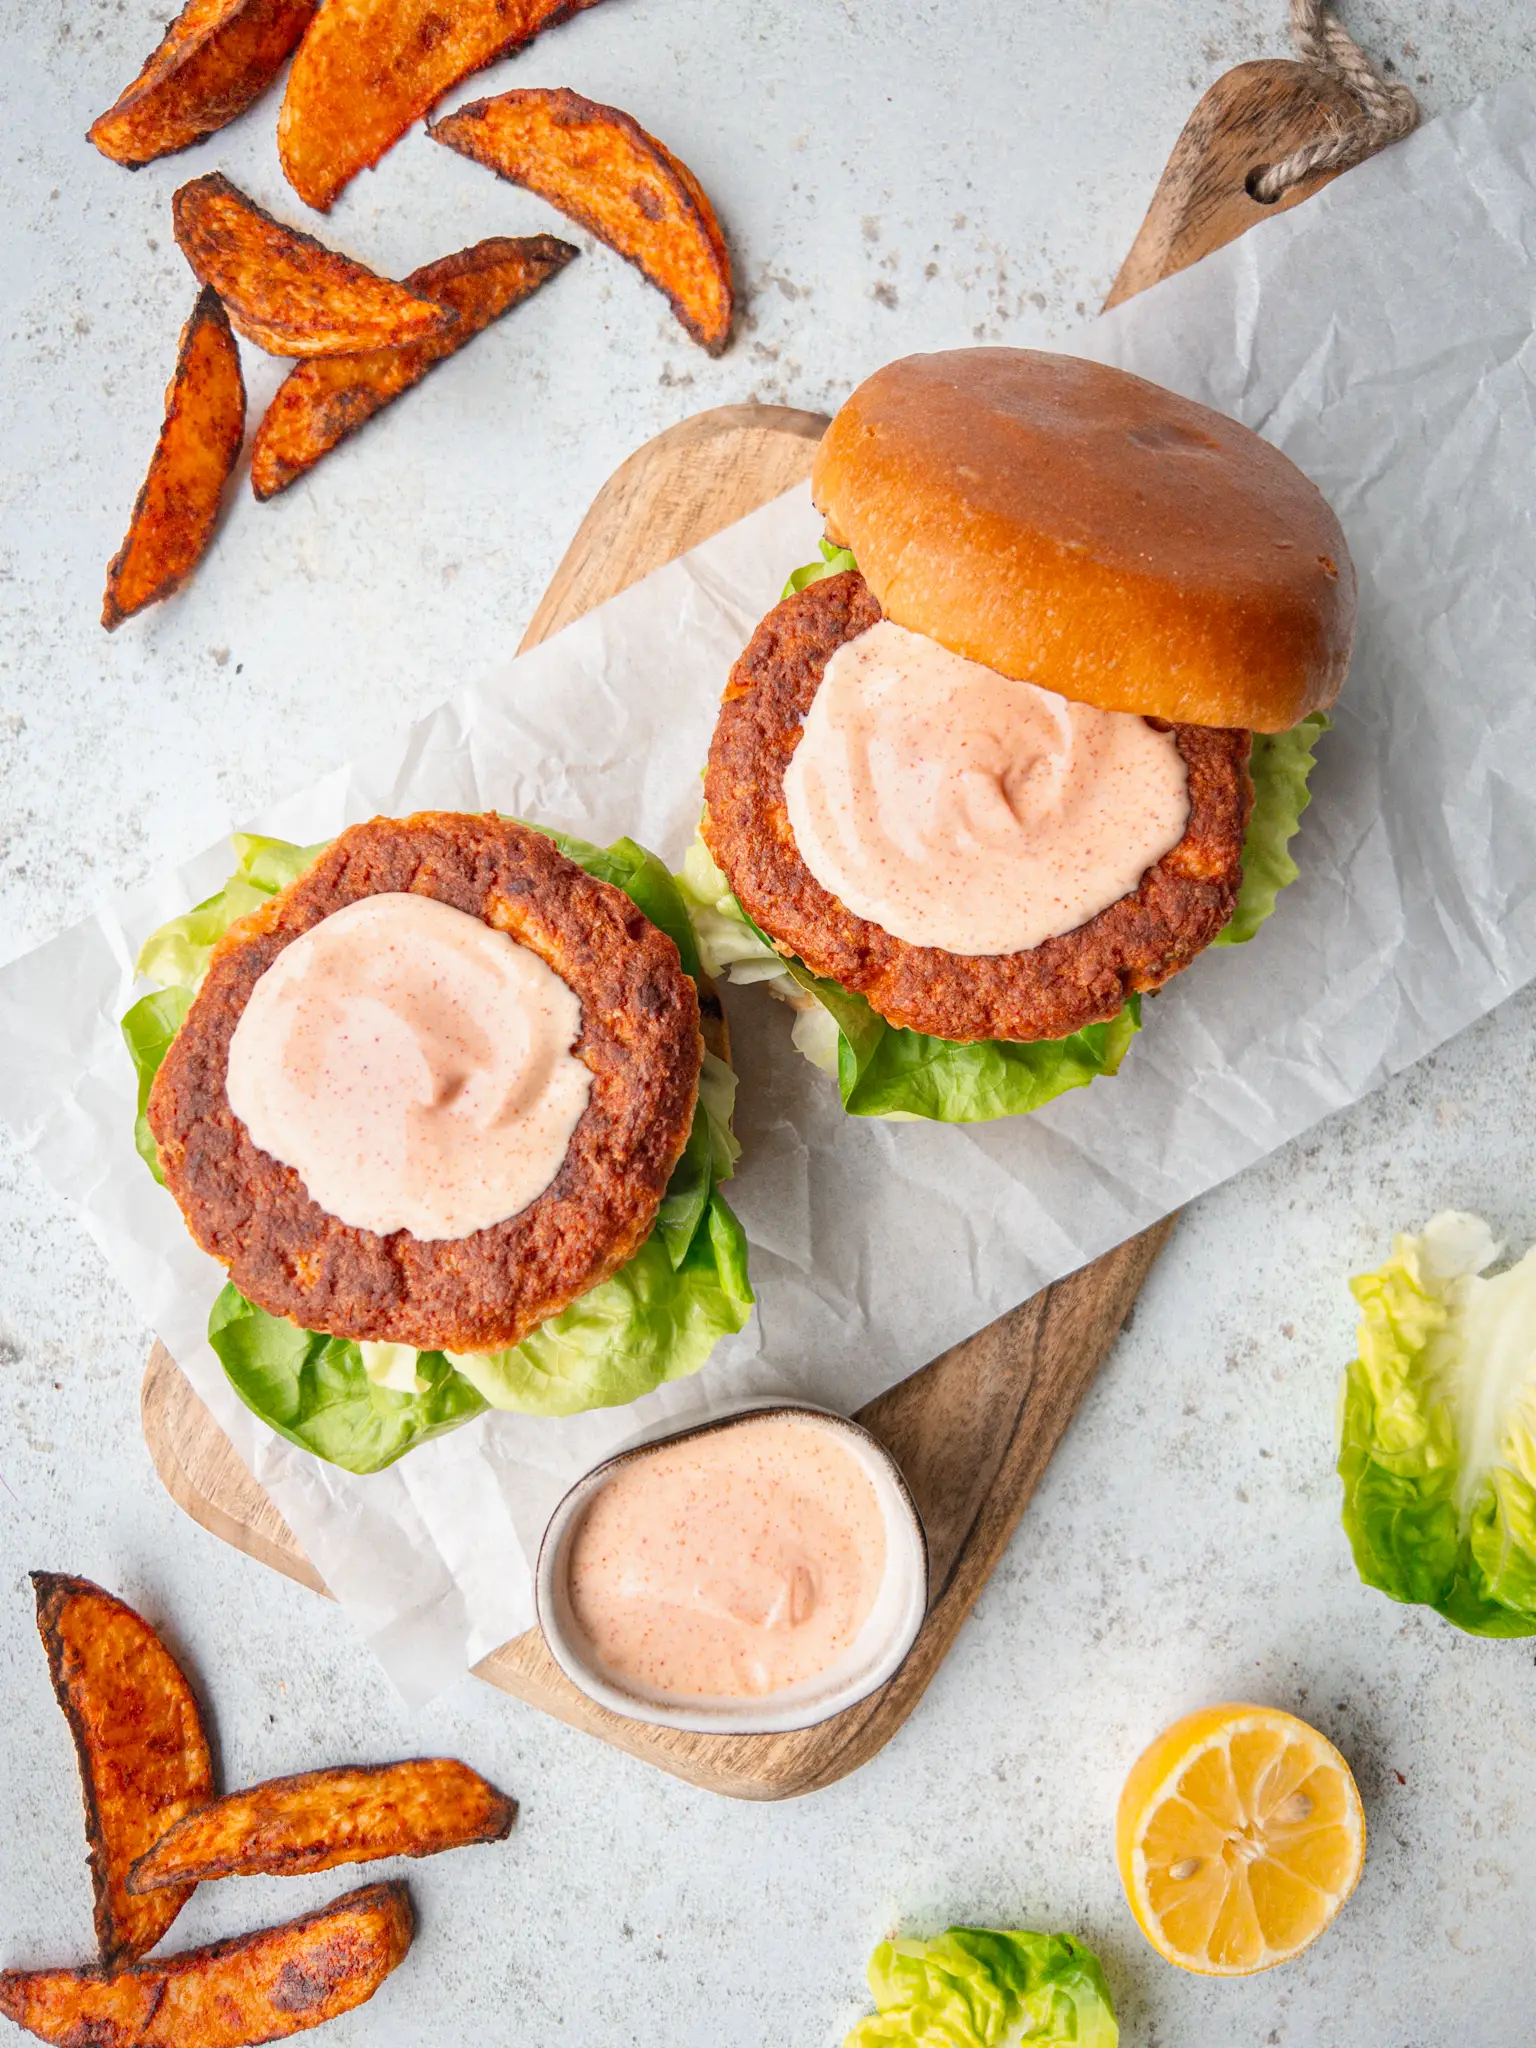 Easy salmon burgers - easy salmon patties